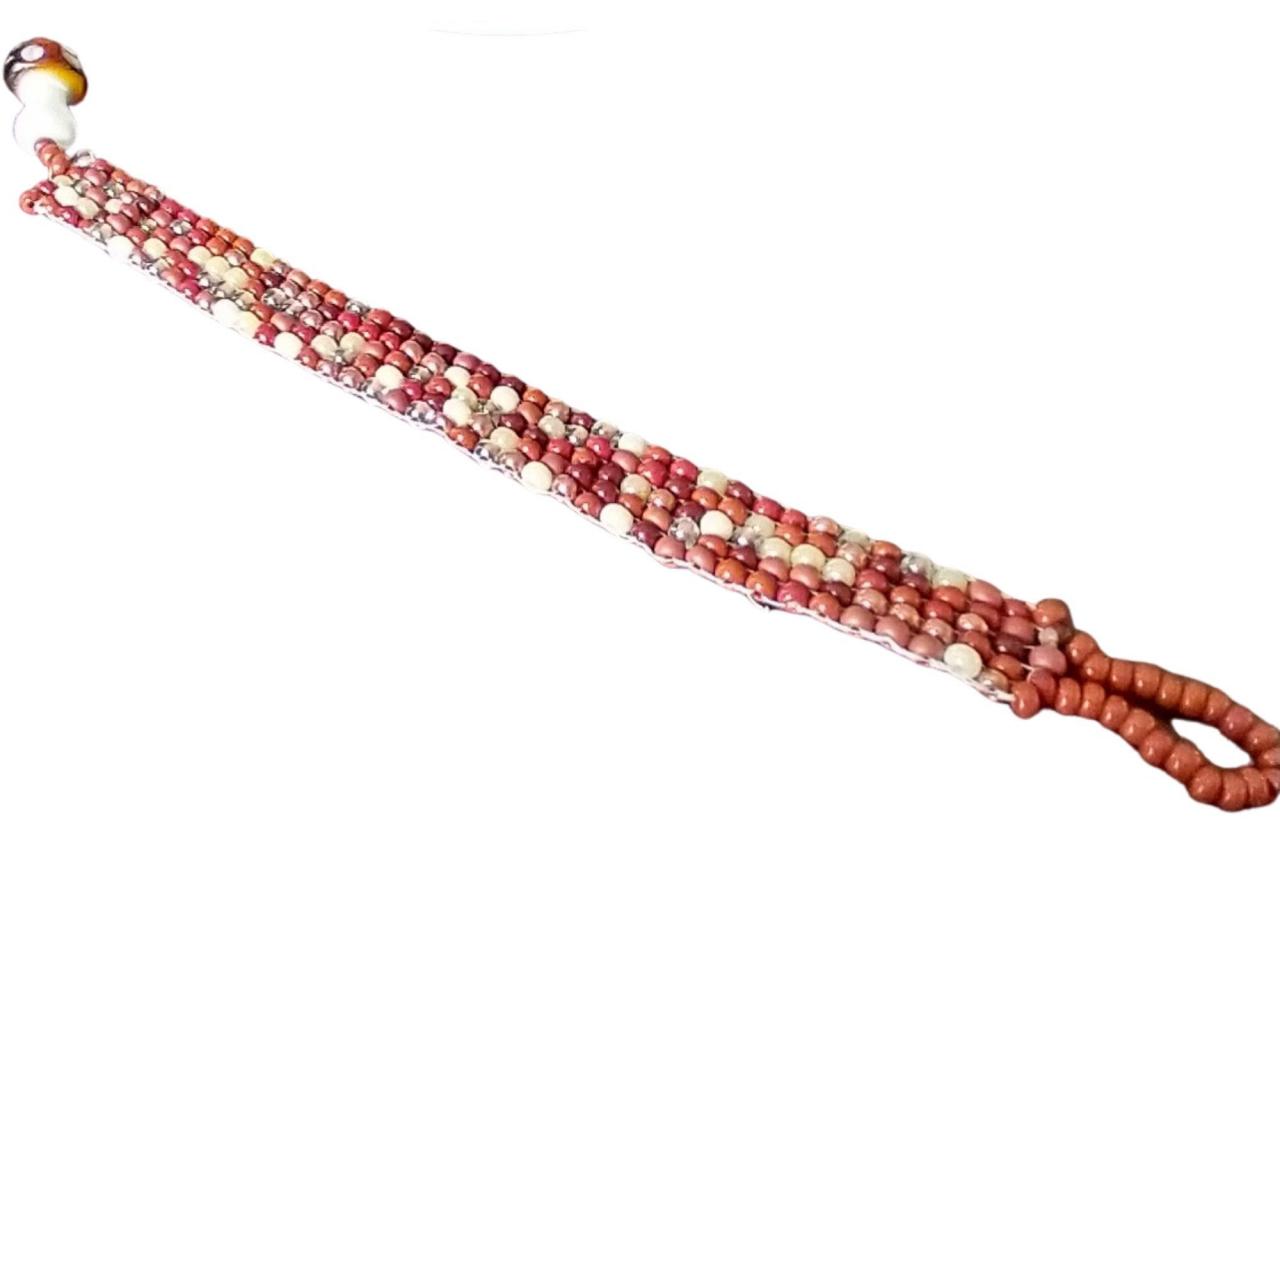 Mushroom Bracelet Loom Bead Bracelet Bracelet Made On Bead Loom Loom Beaded Bracelet Fall Bracelet Autumn Bracelet Fall Colors